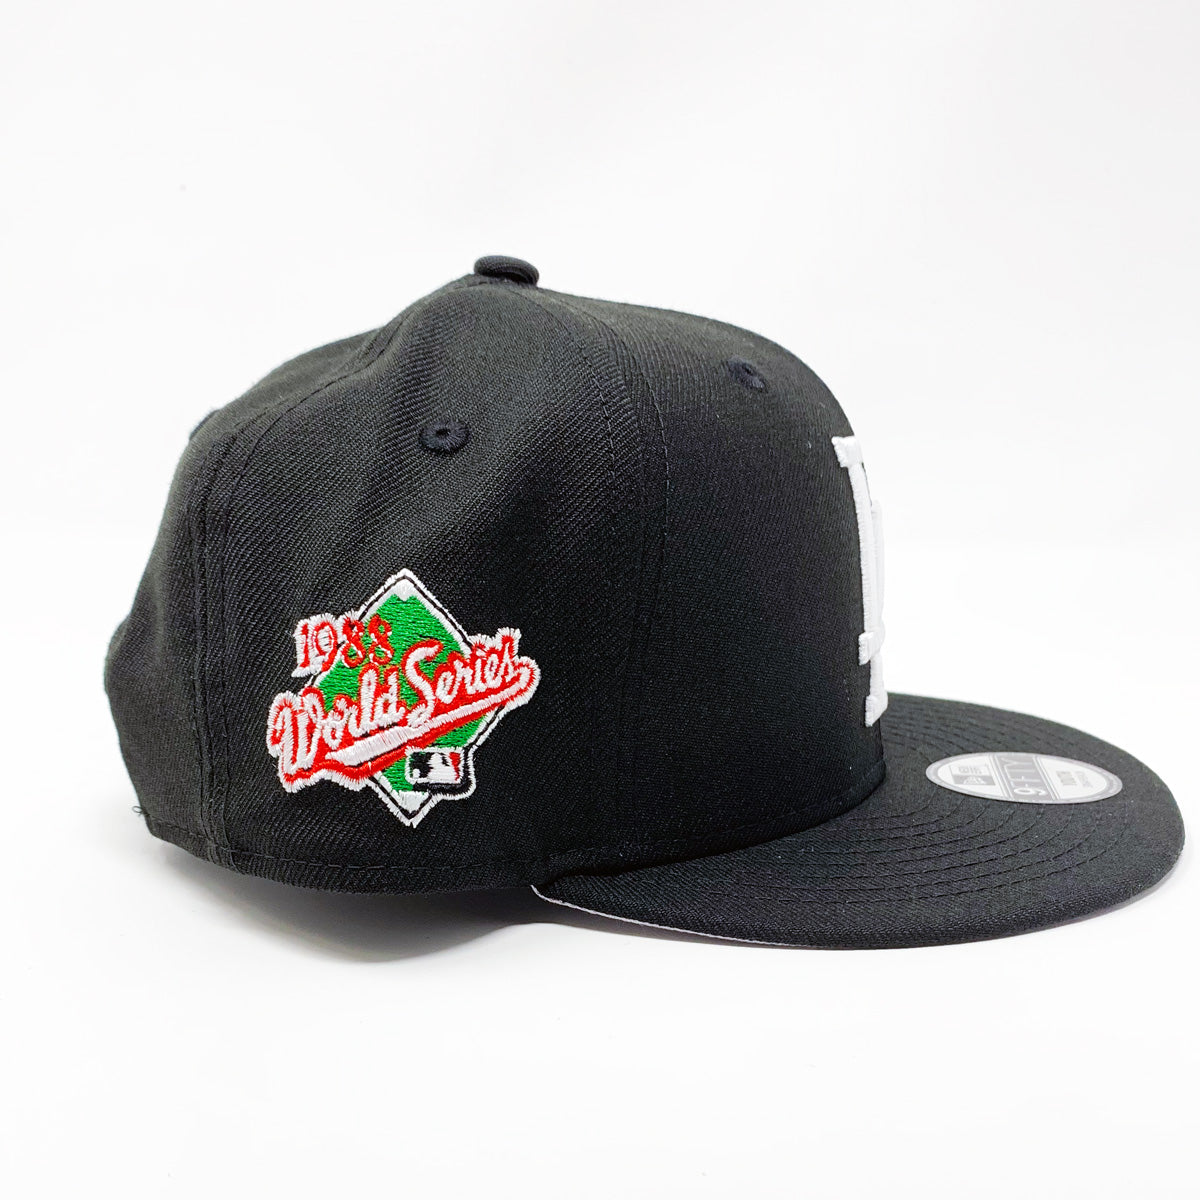 Dodgers Custom 1988 WS Cap (Black)